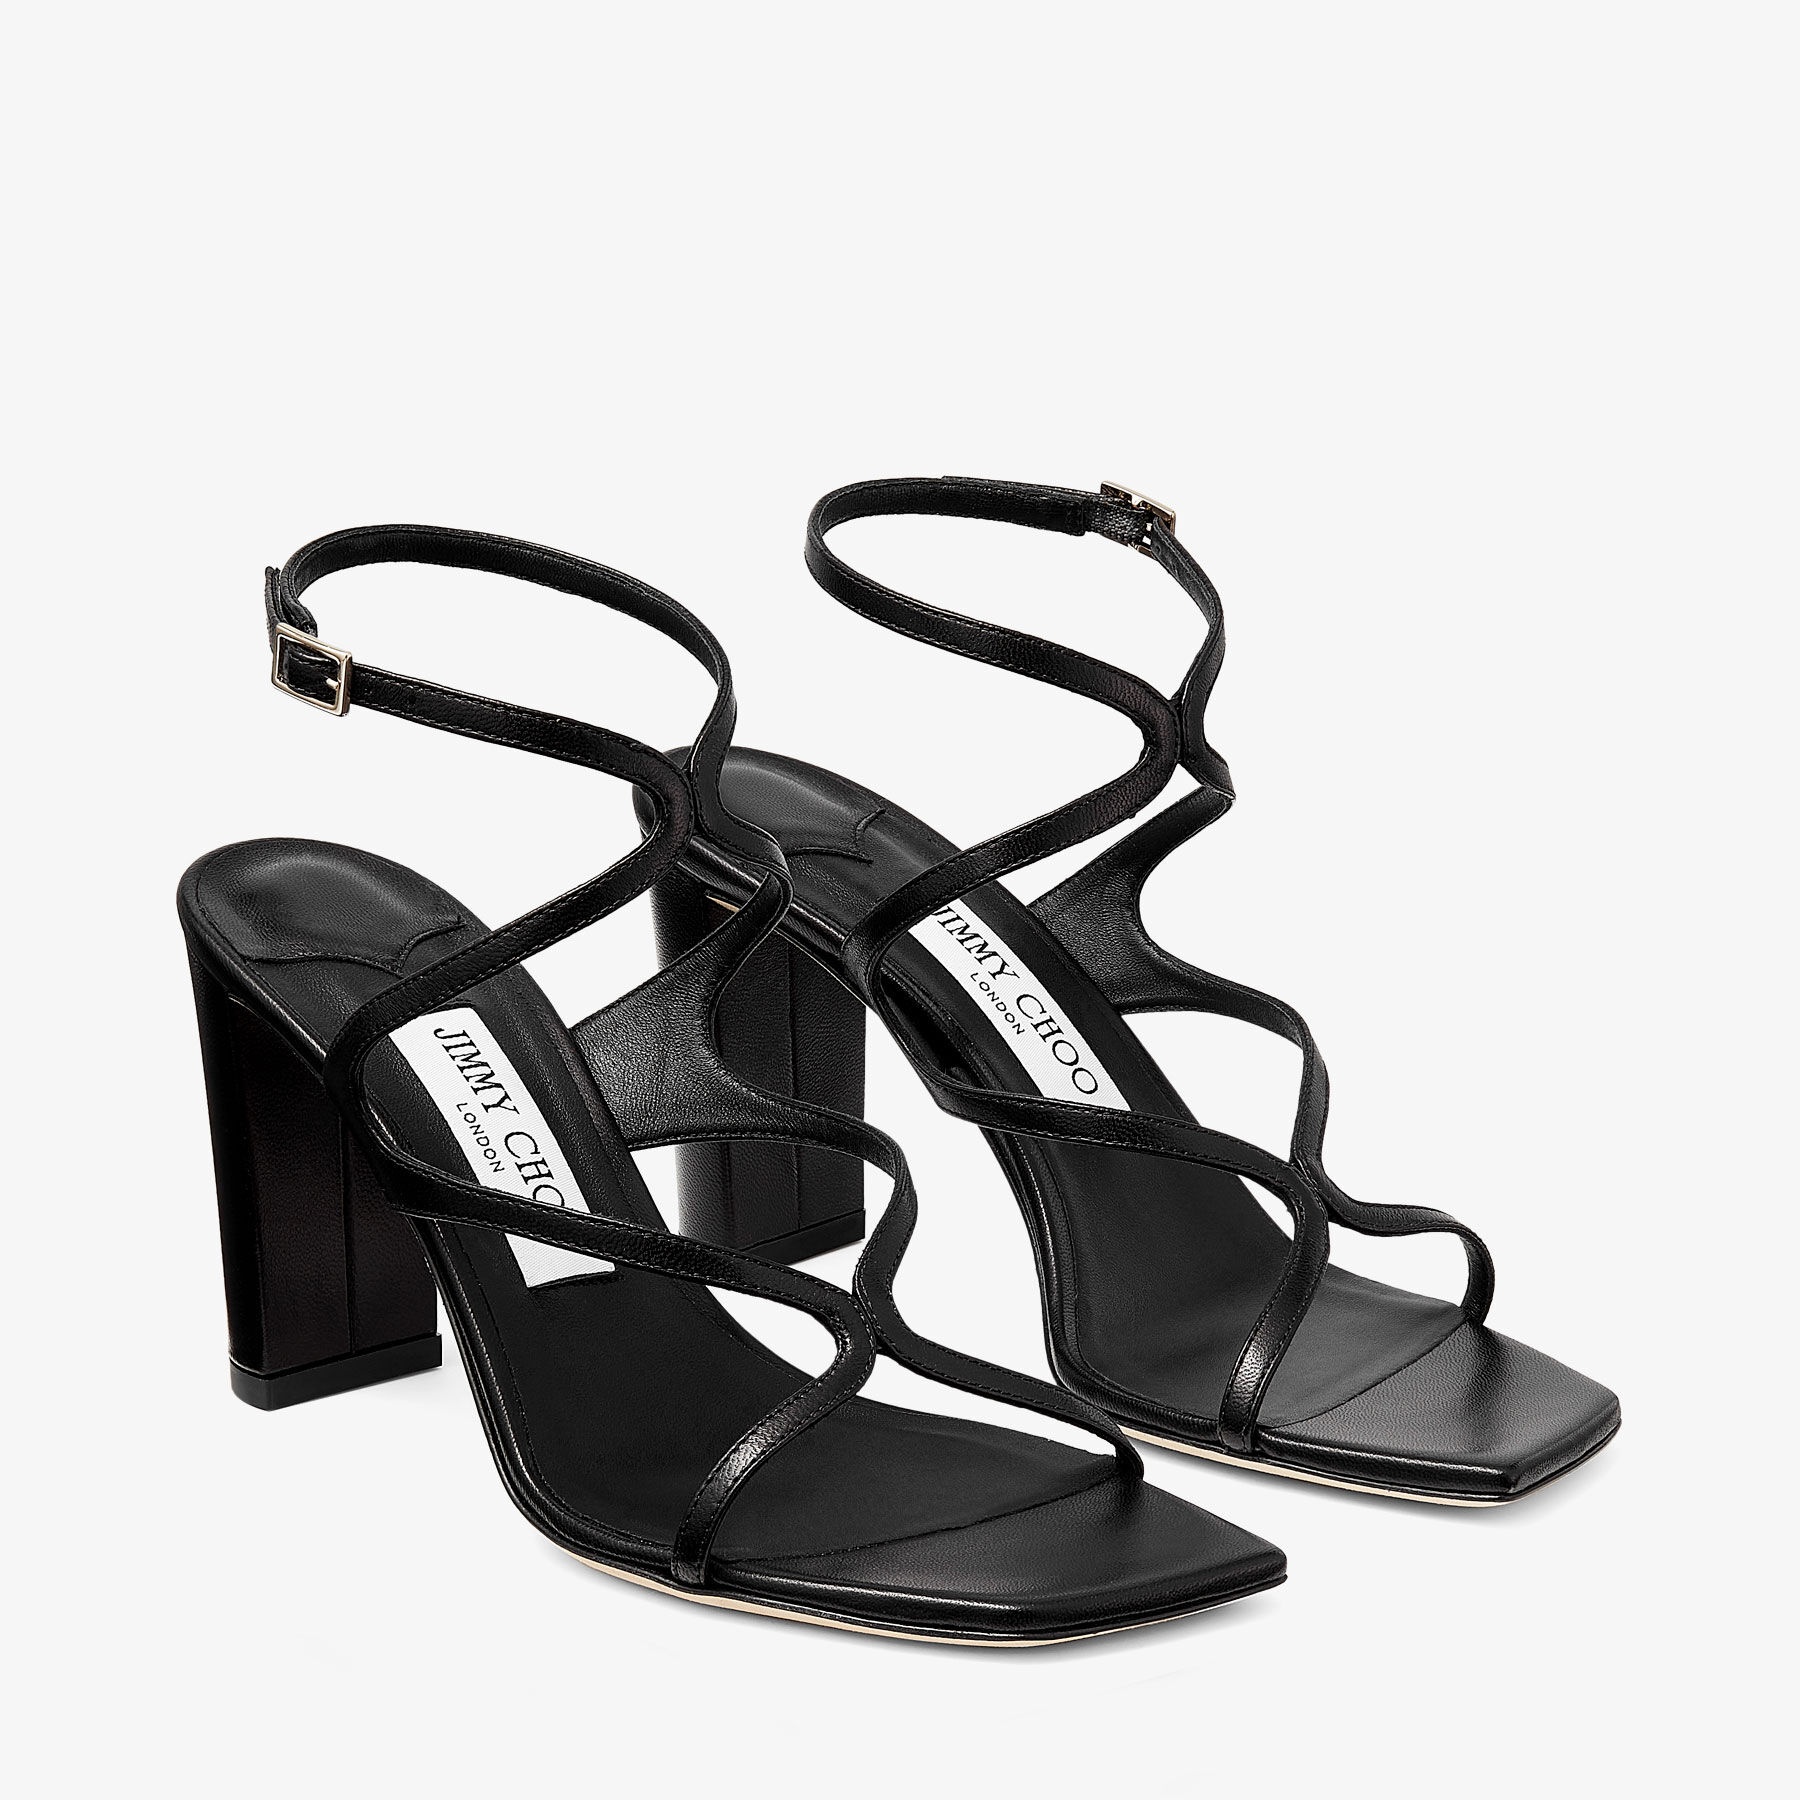 Azie 85
Black Nappa Leather Sandals - 2